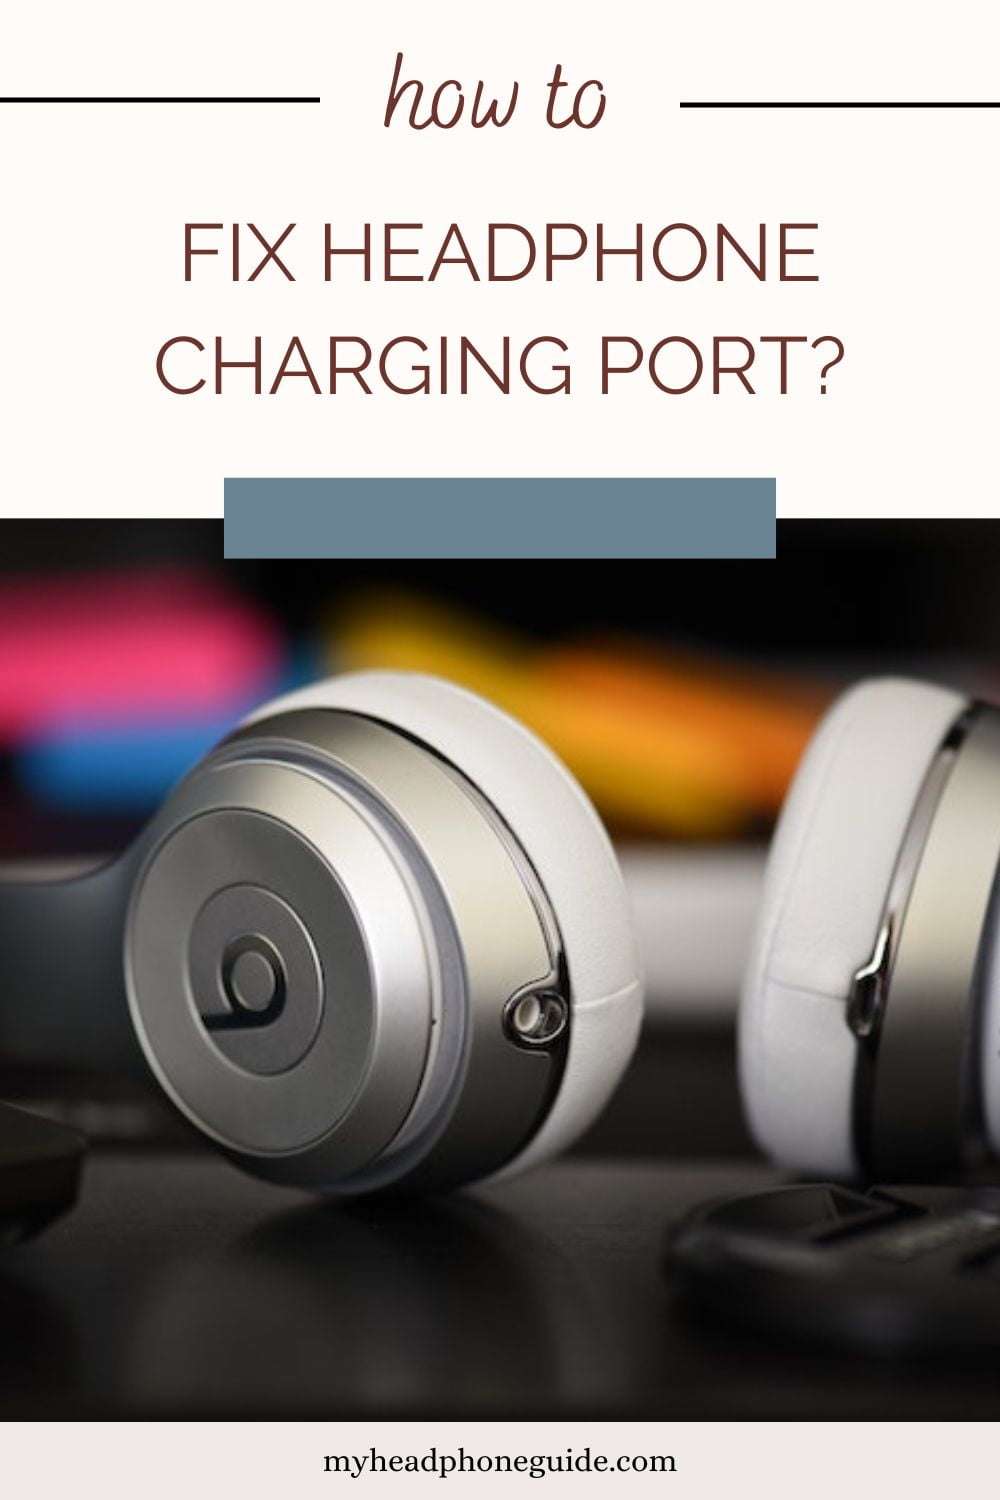 How To Fix Headphone Charging Port?